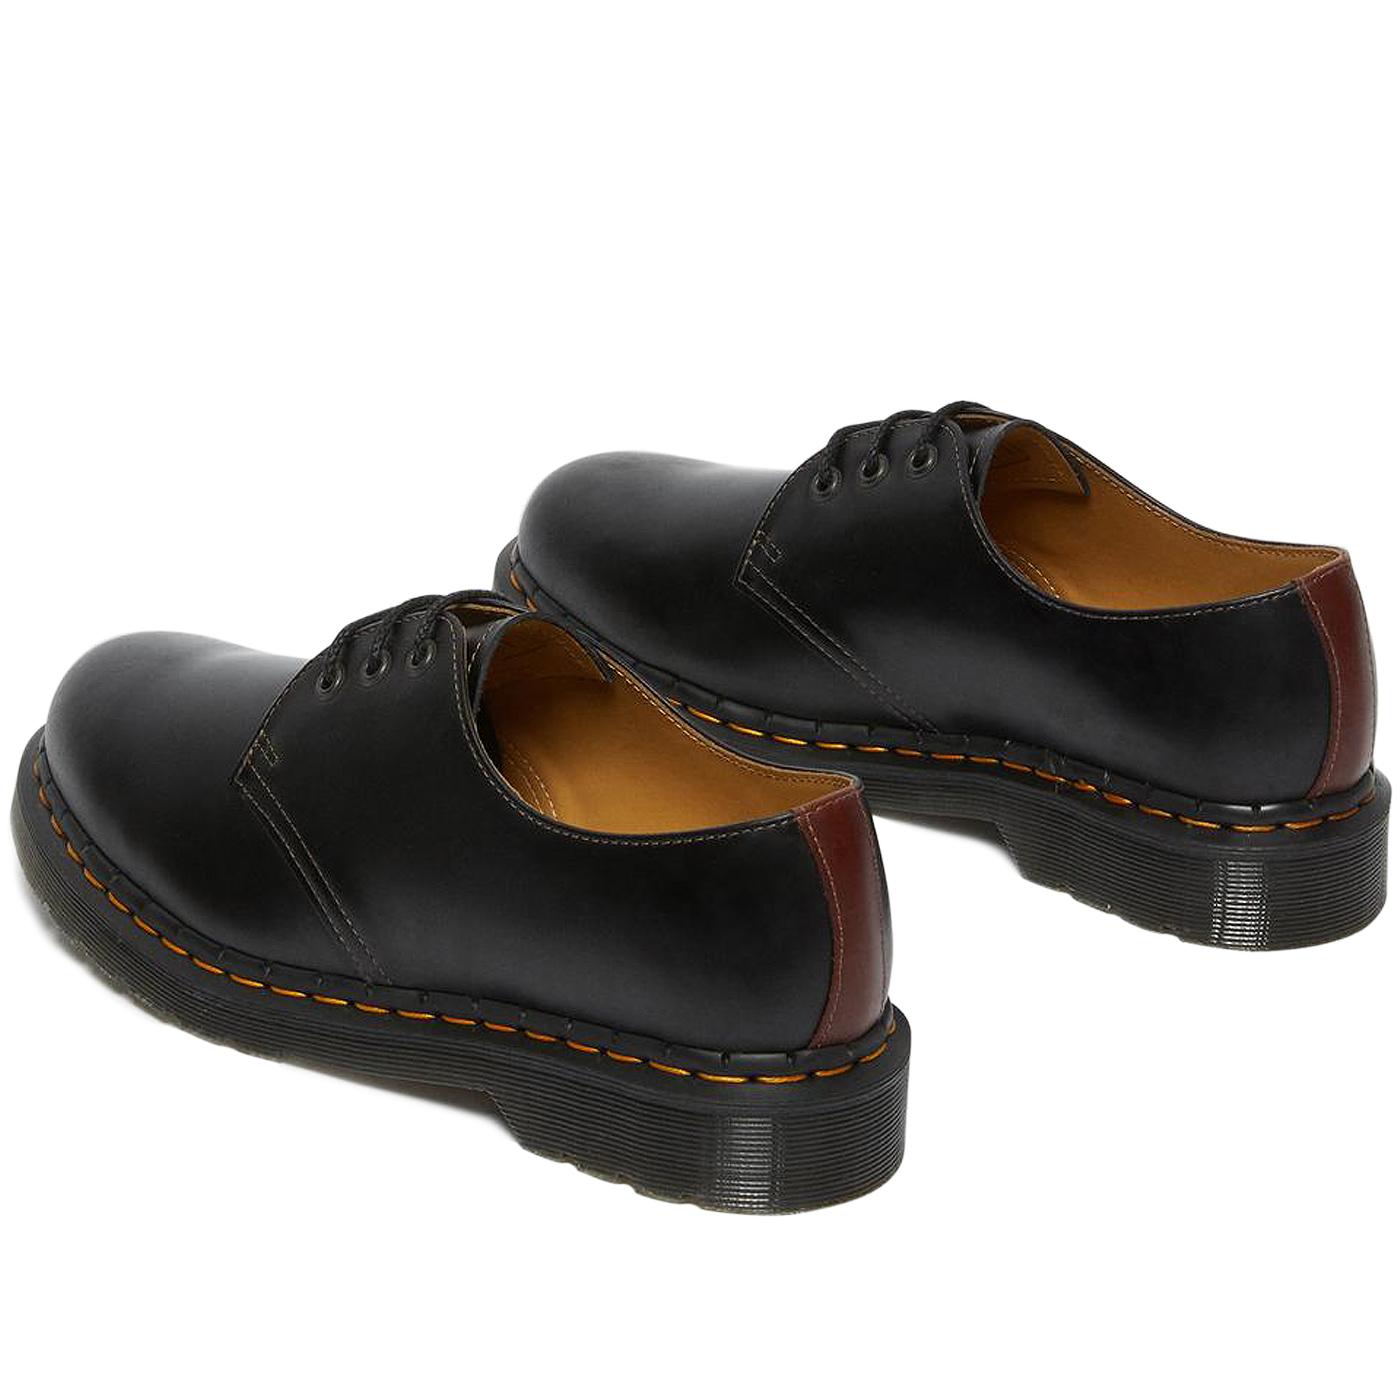 DR MARTENS 1461 Abruzzo Mod Oxford Shoes Black + Brown